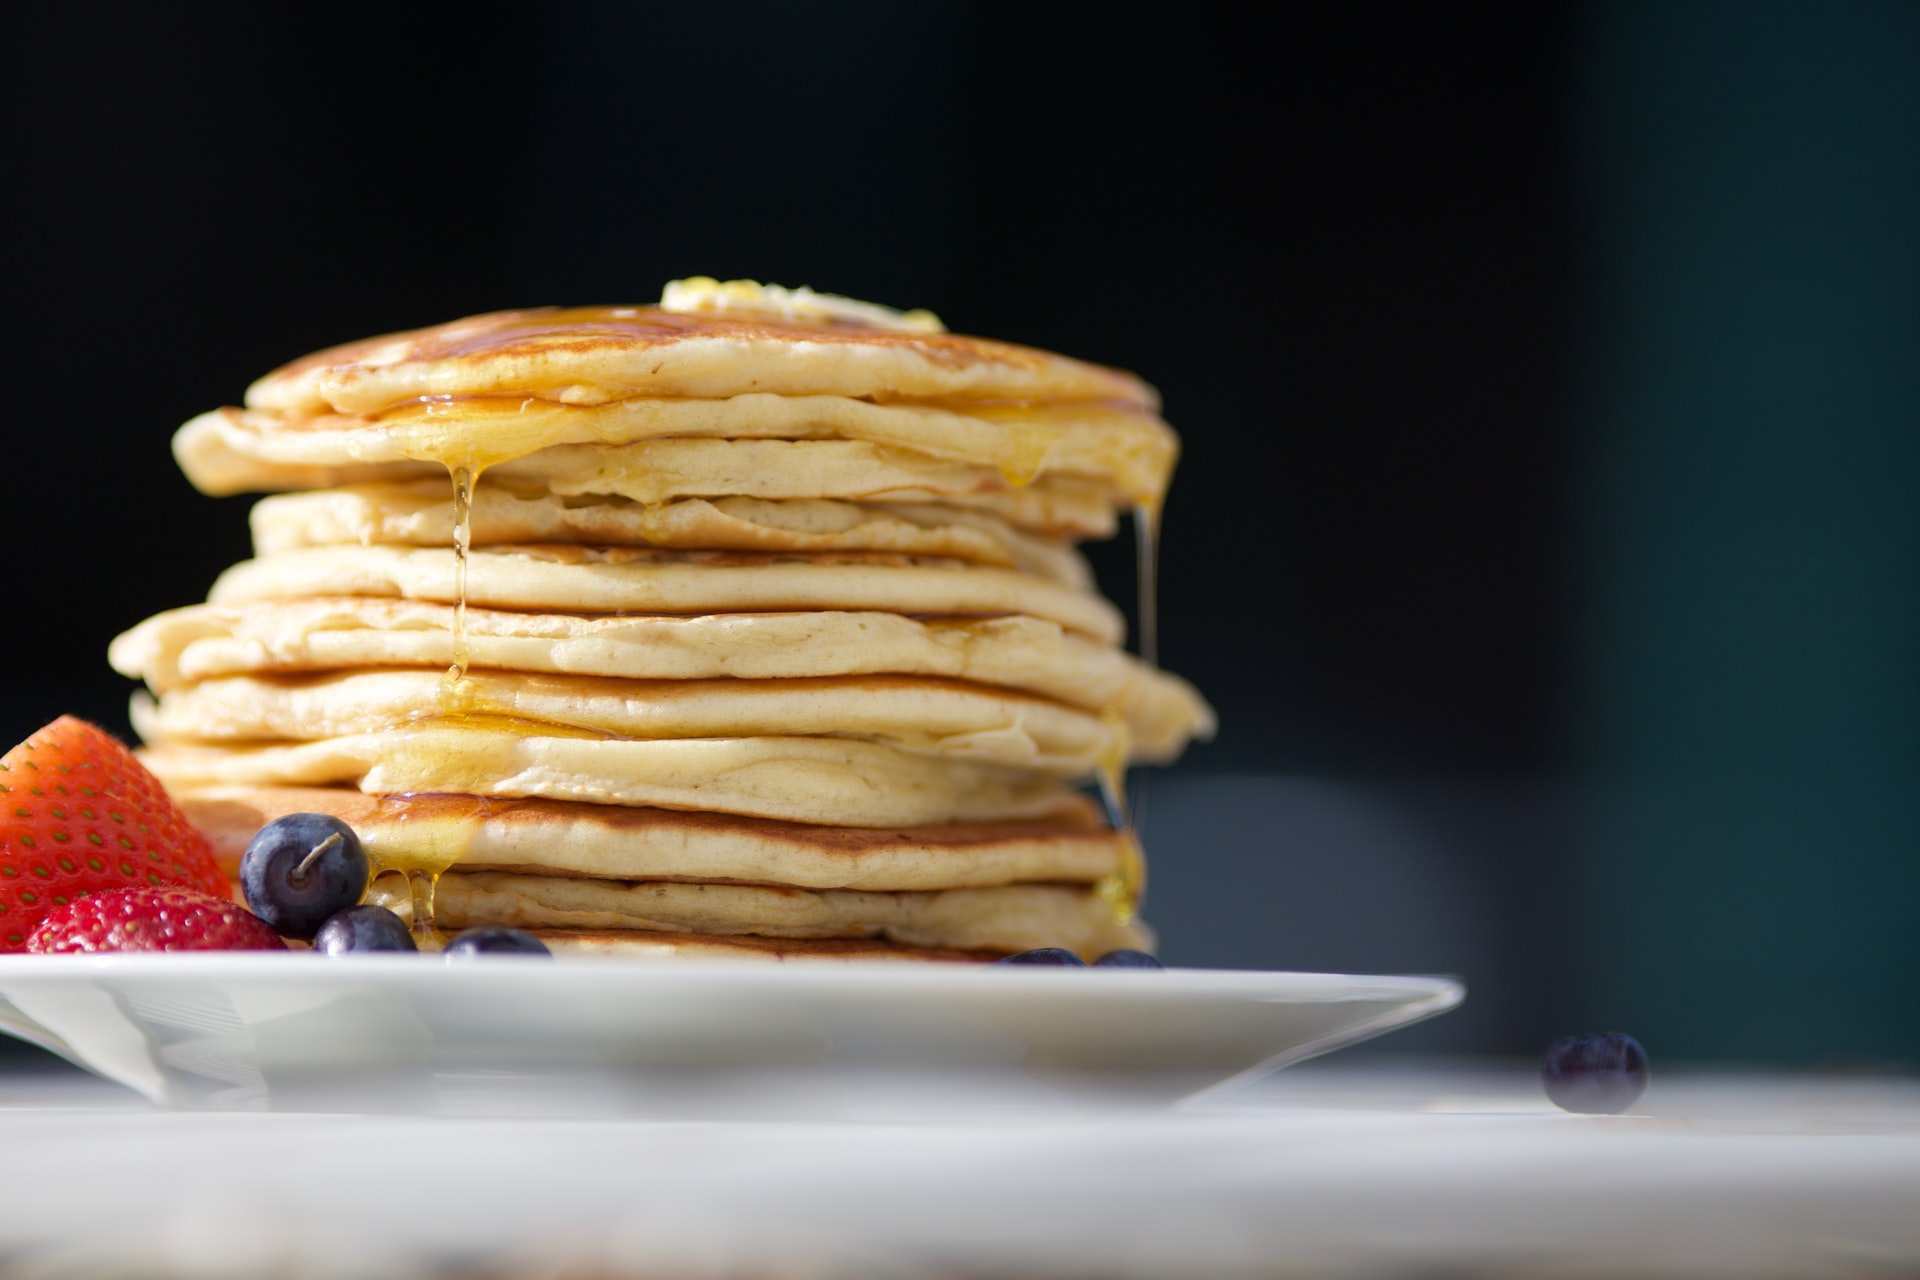 Photo of pancakes by Luke Pennystan on Unsplash